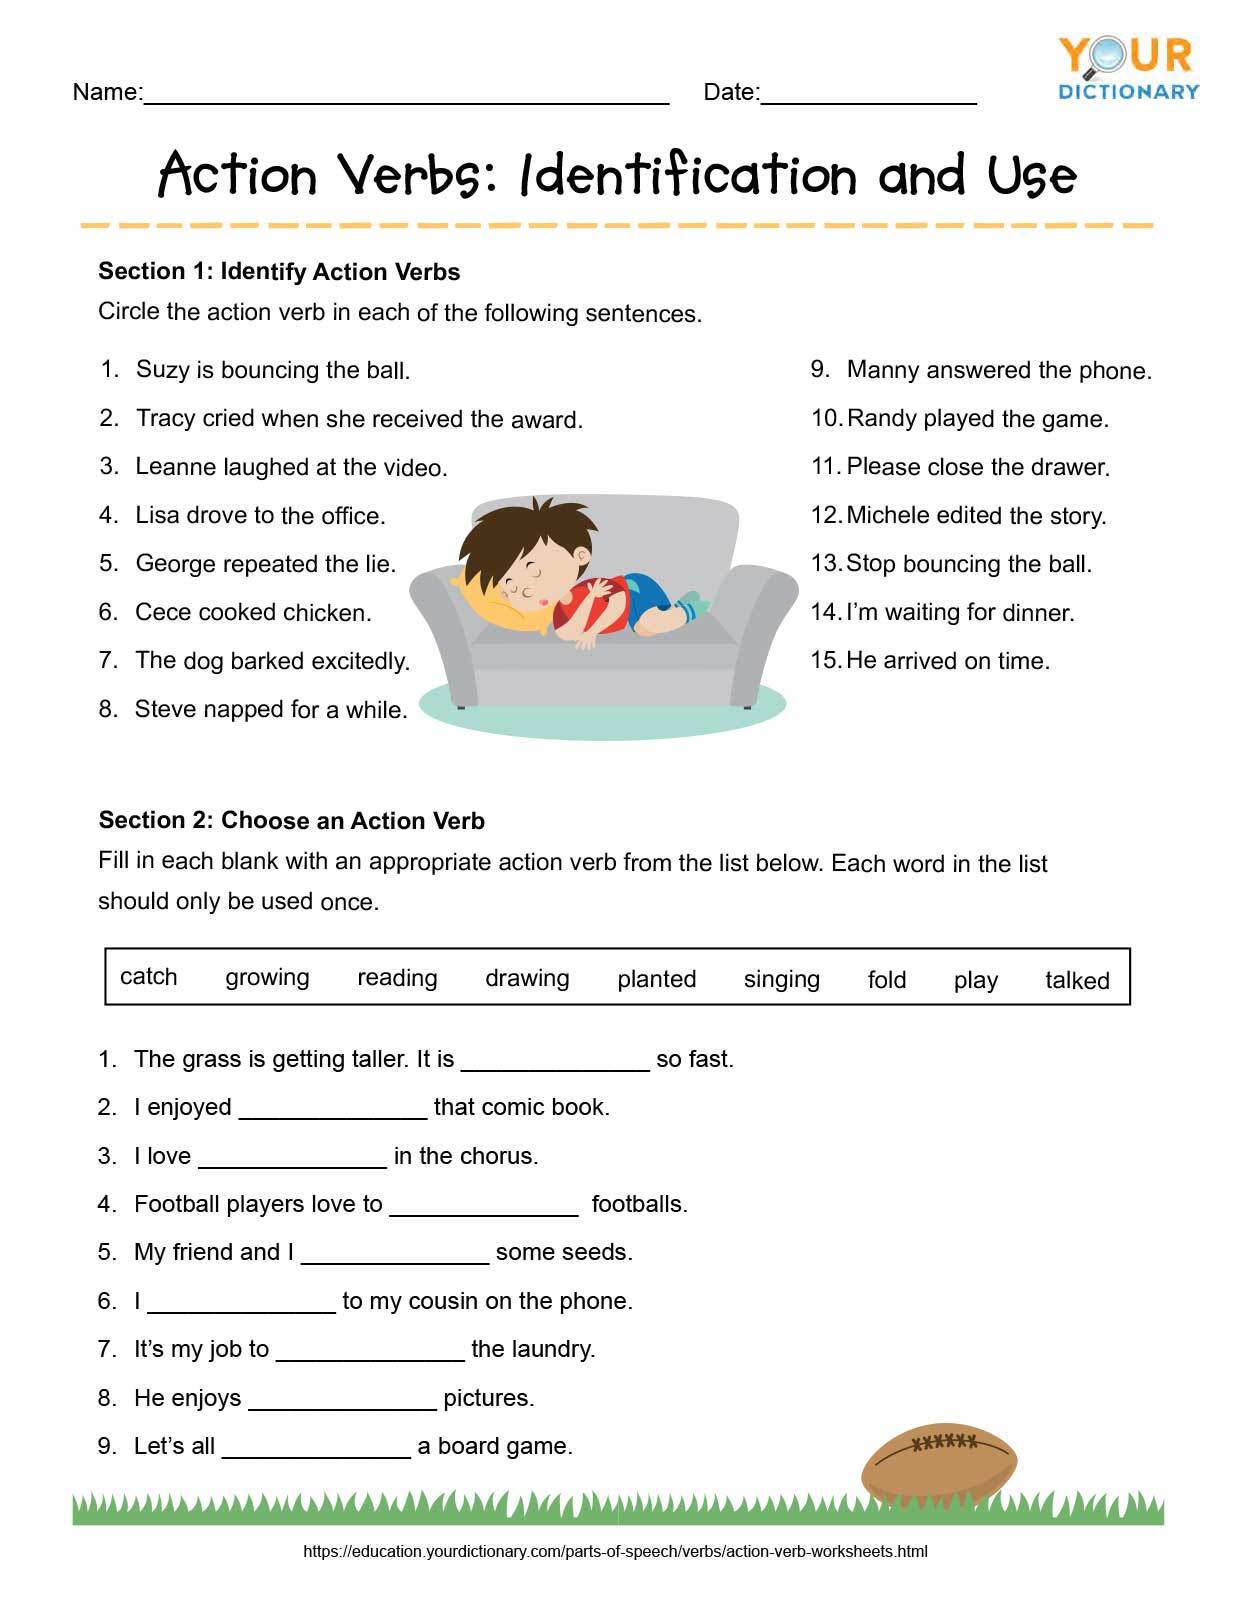 Matching Action Verbs Worksheet All Kids Network Action Verbs Worksheet For 1st Grade Your 